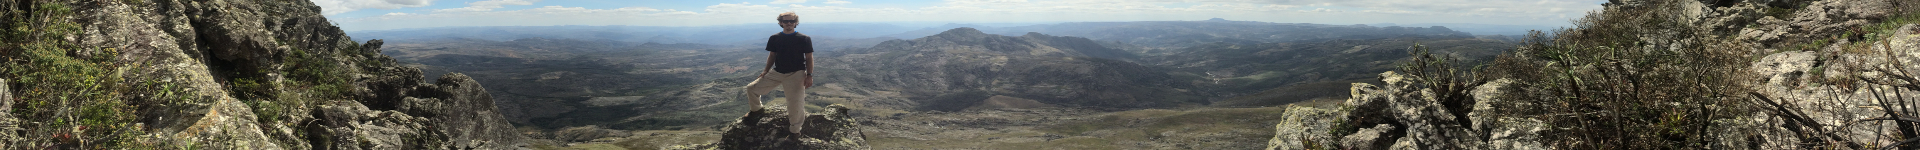 Pico do Itambé - Capivari, MG/Brasil